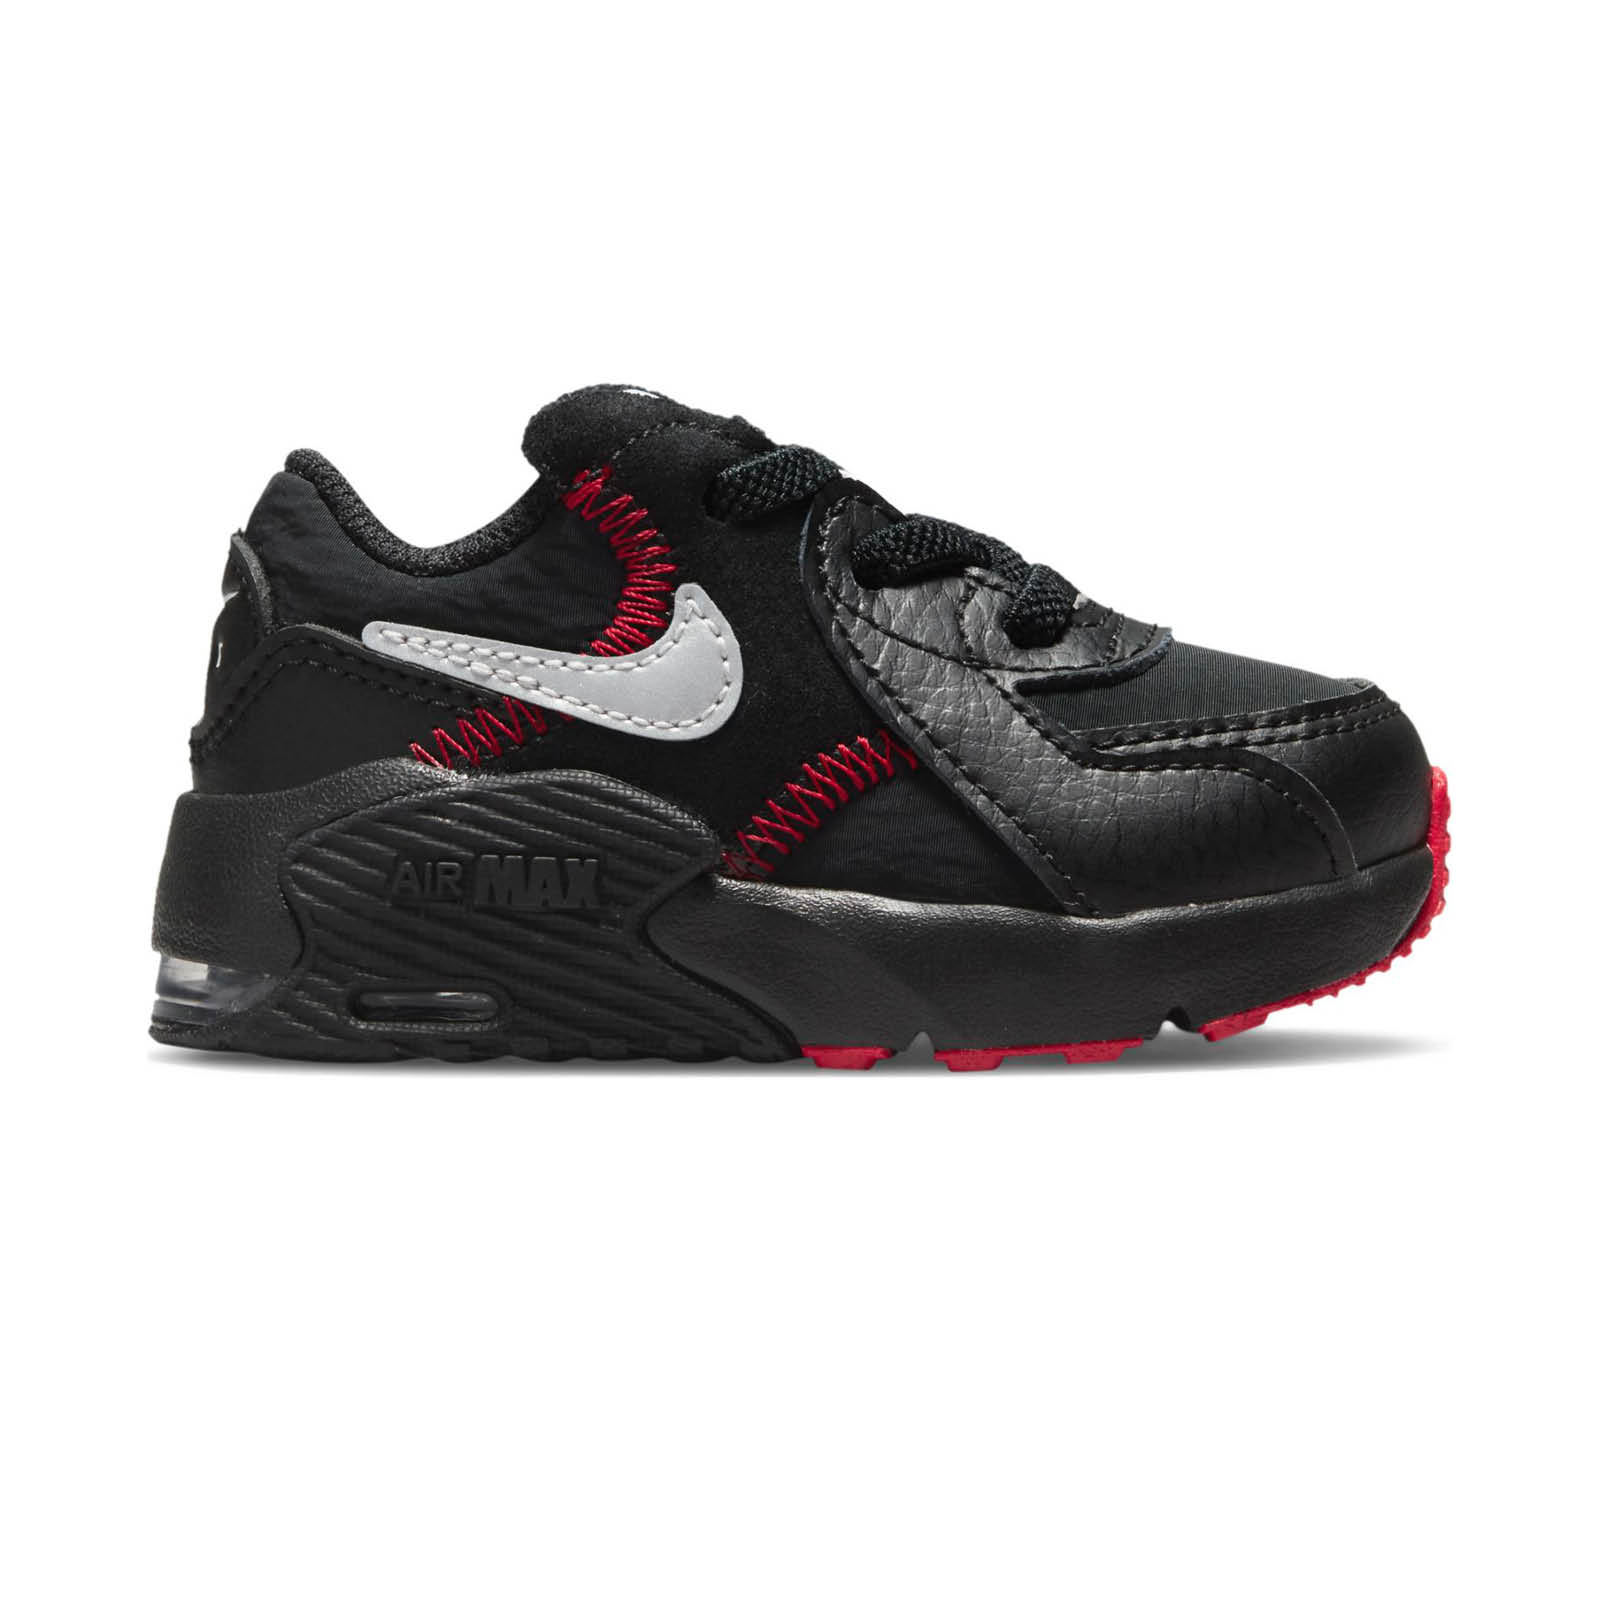 Nike - NIKE AIR MAX EXCEE (TD) - BLACK/METALLIC SILVER-BLACK-SPORT RED 559497